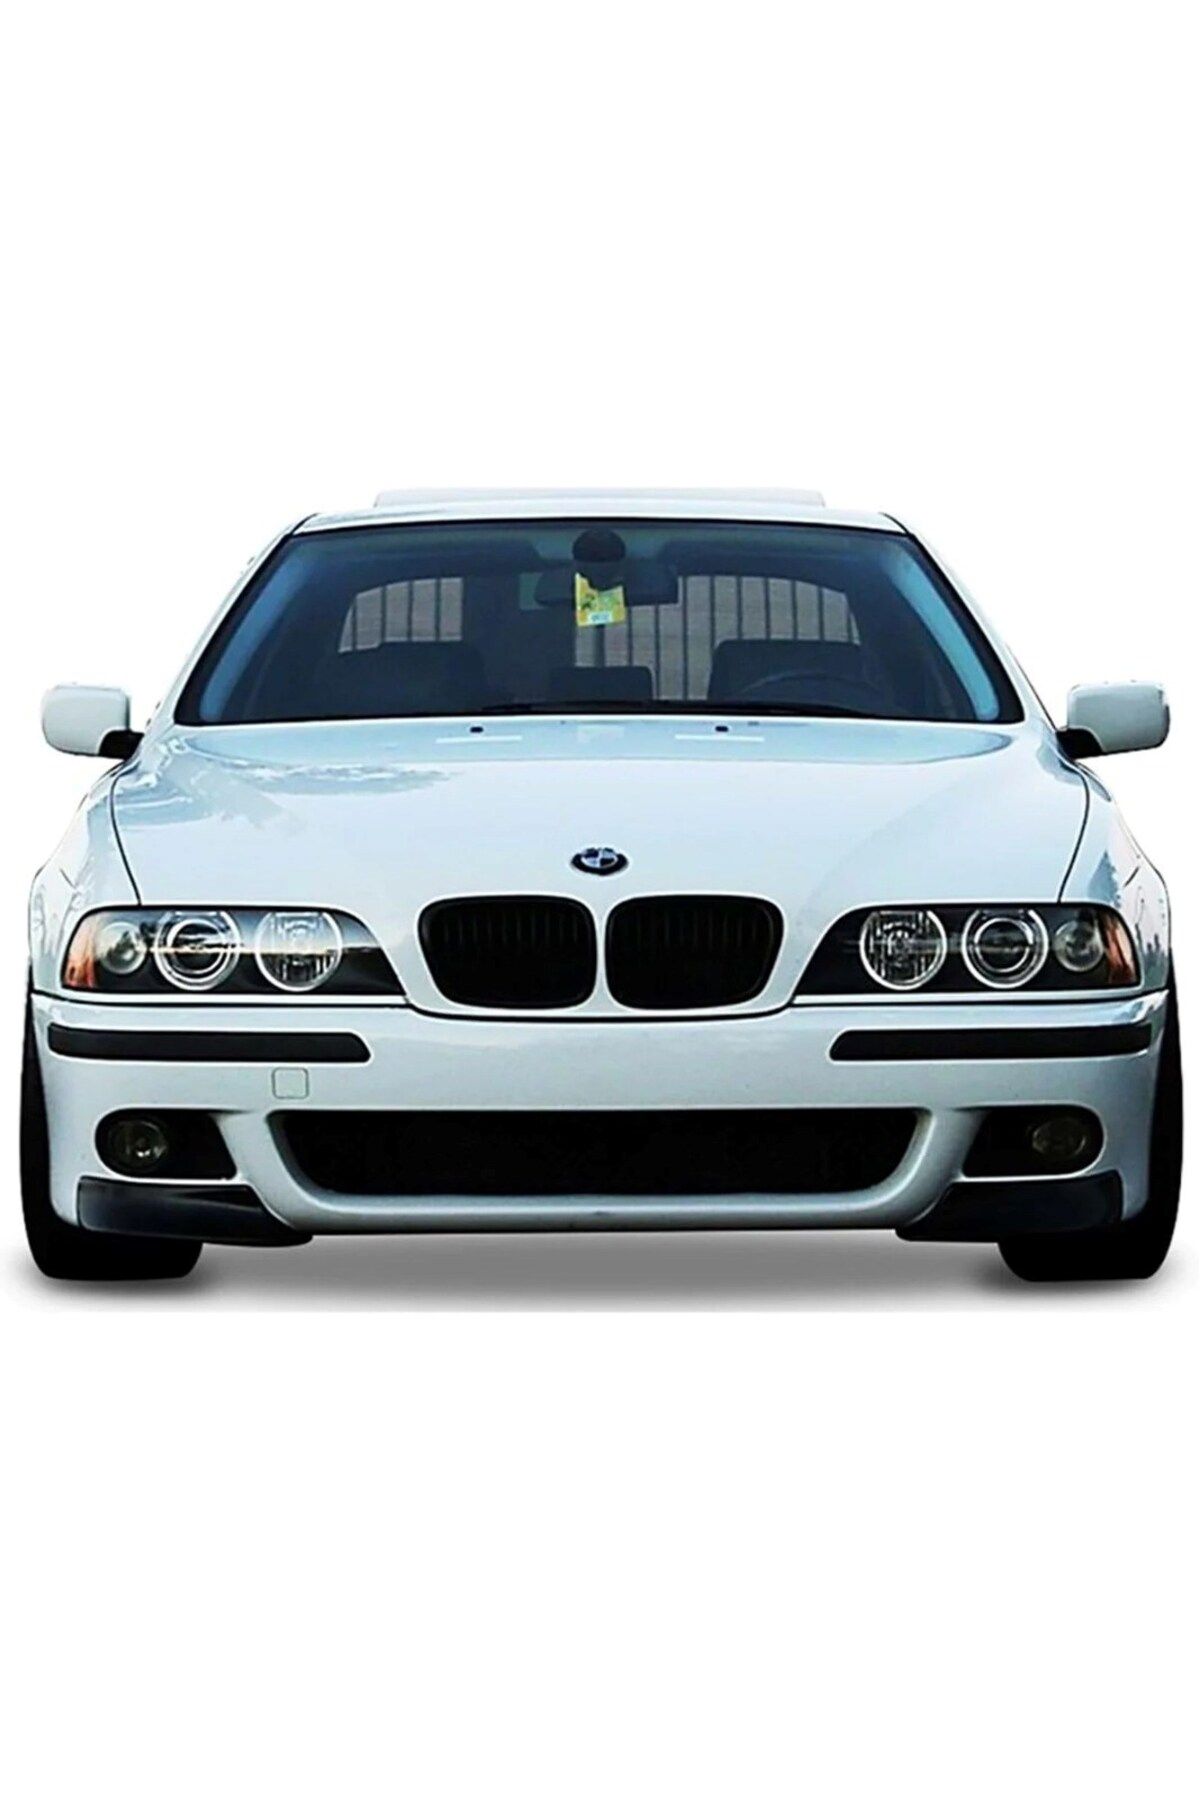 HYM TUNİNG BMW 5 SERİSİ M5 Uyumlu  ÖN TAMPON FLAP SETİ PİANO BLACK 1995-2004